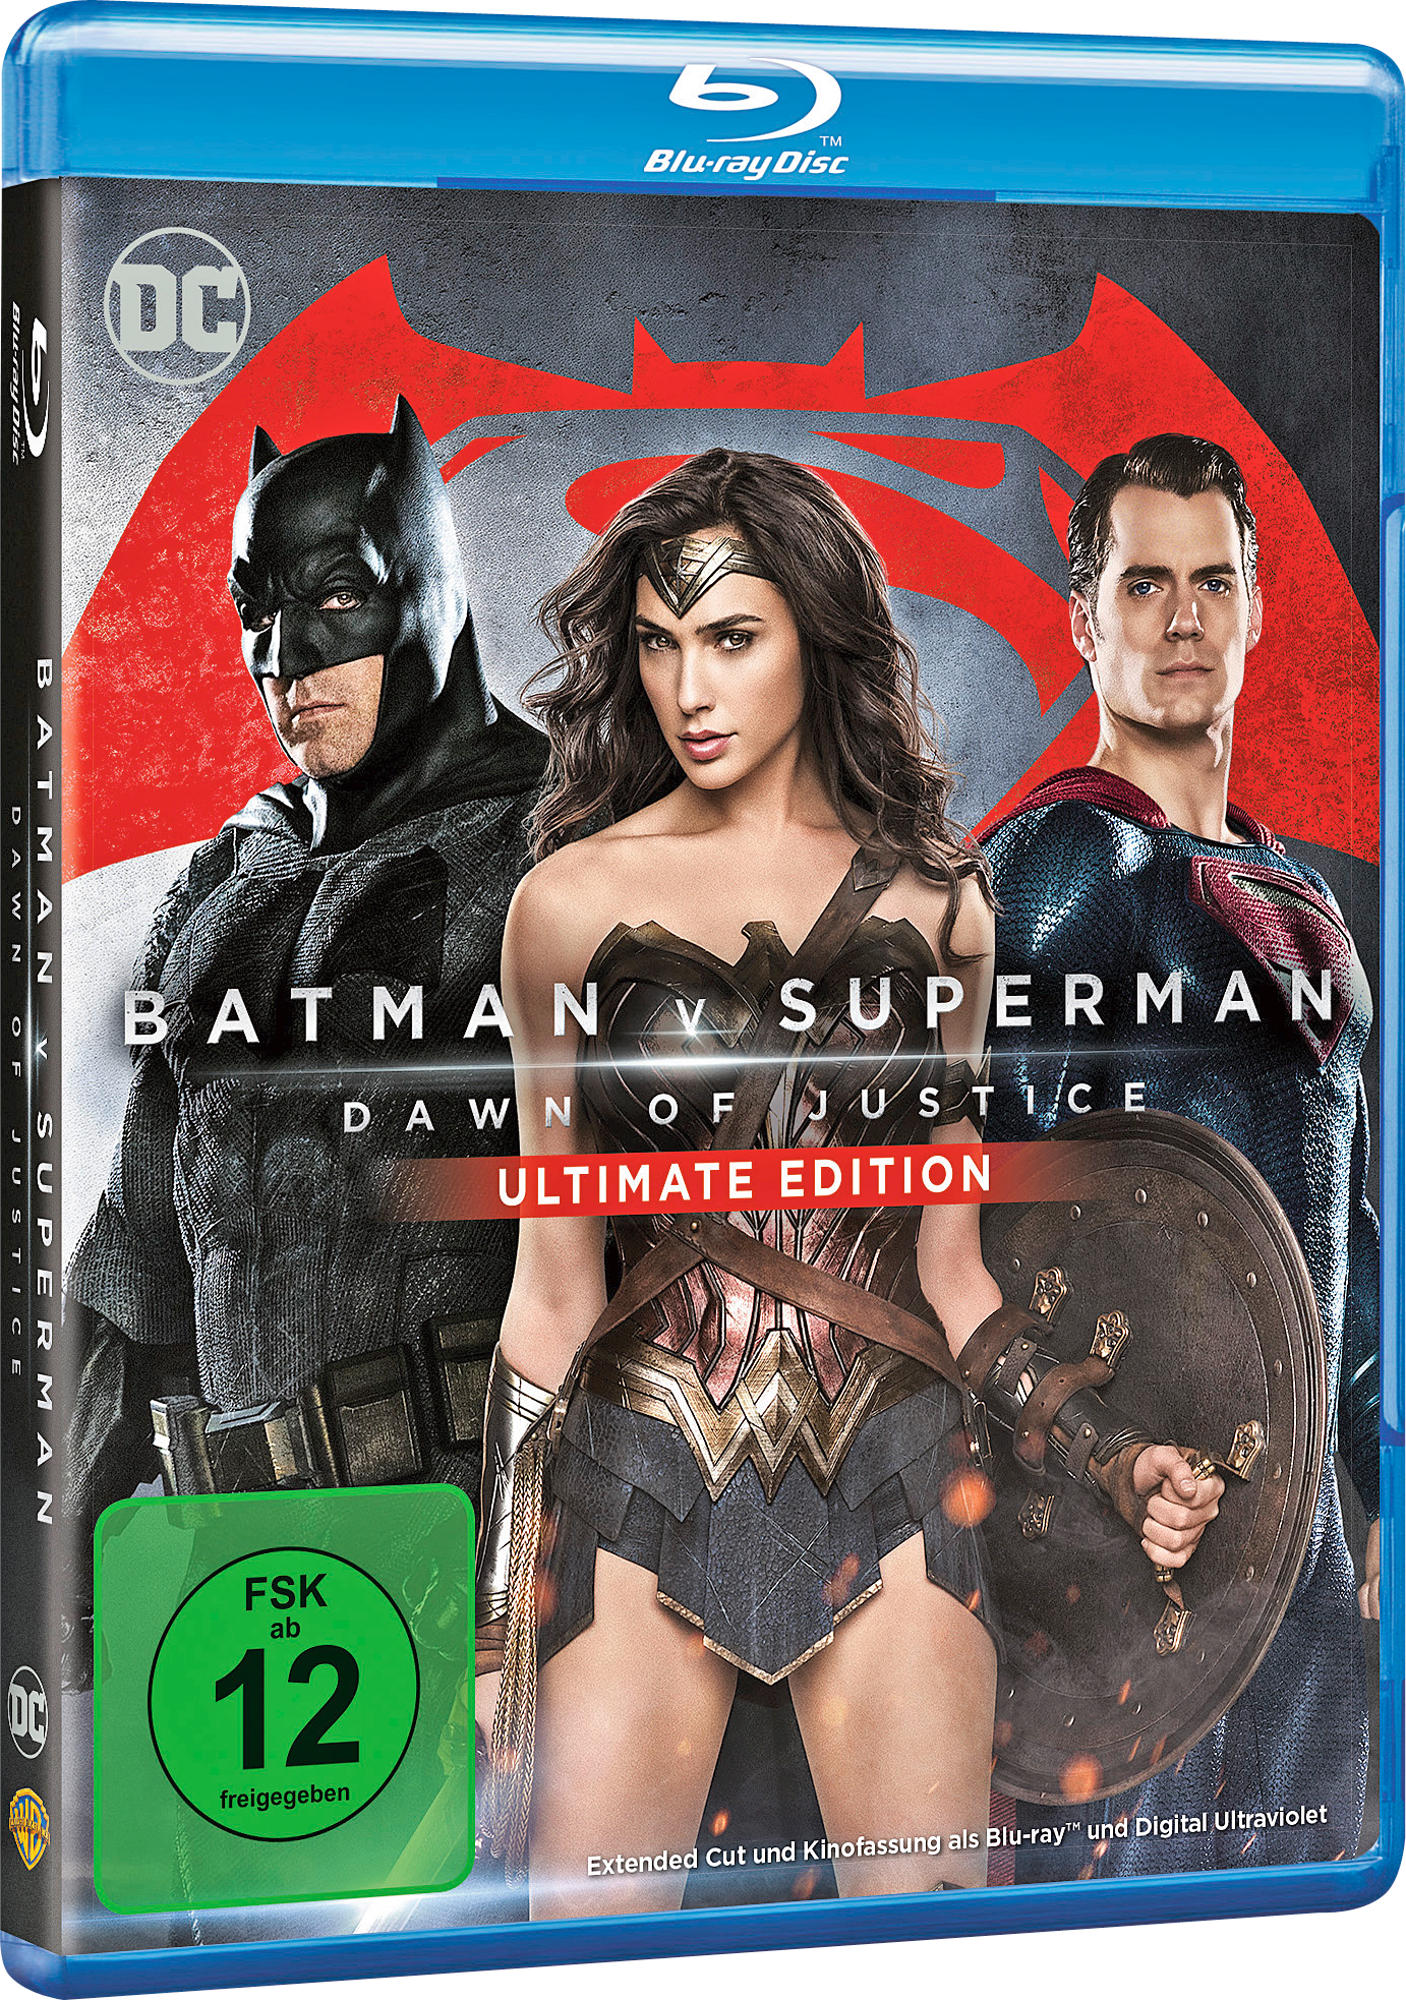 Batman v Superman: (Ultimate Edition) Blu-ray of Justice Dawn